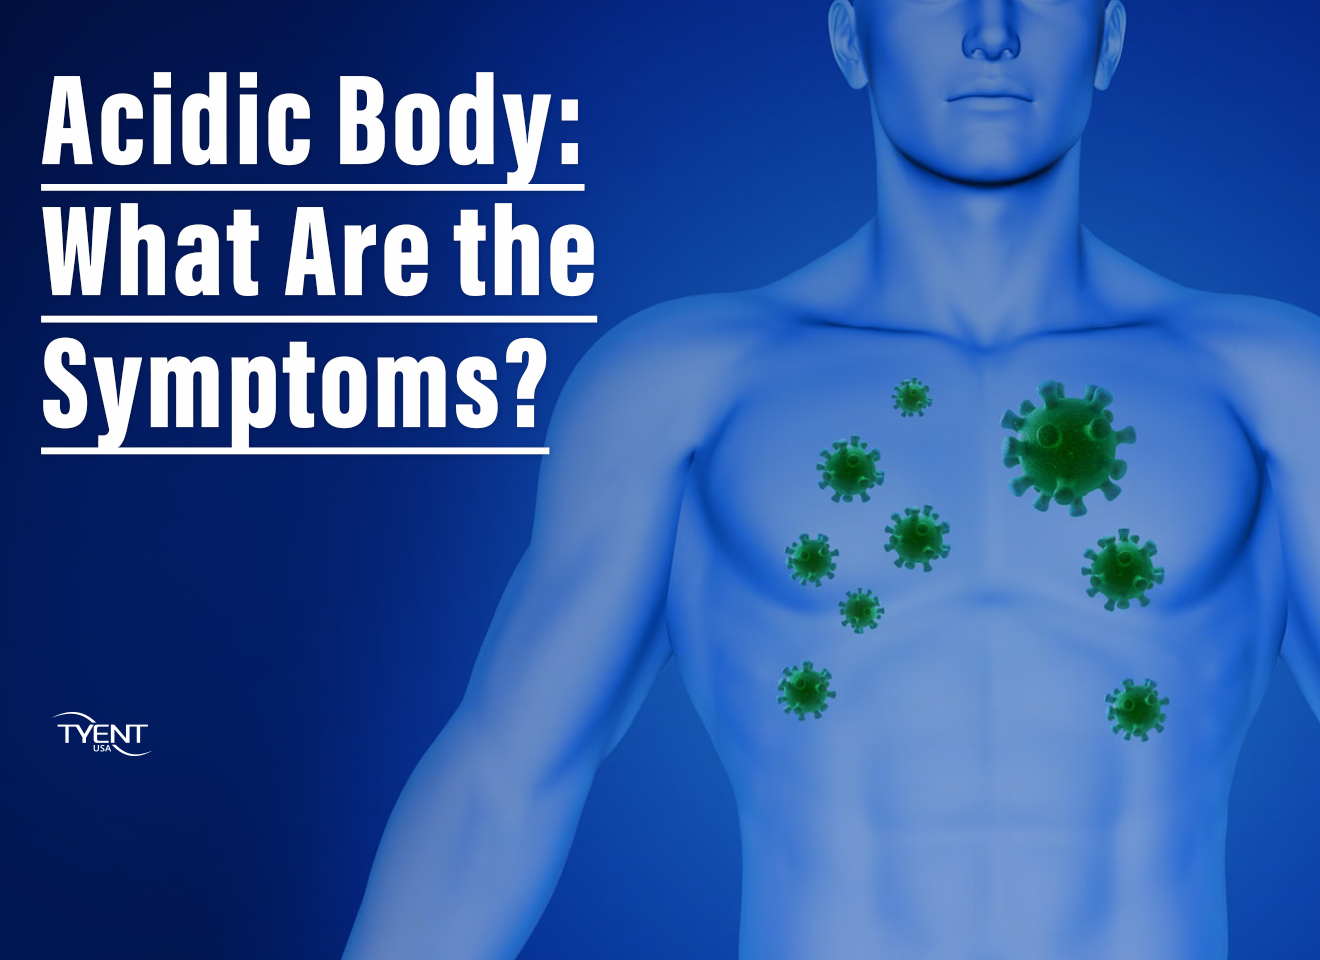 Acidic Body- What Are the Symptoms